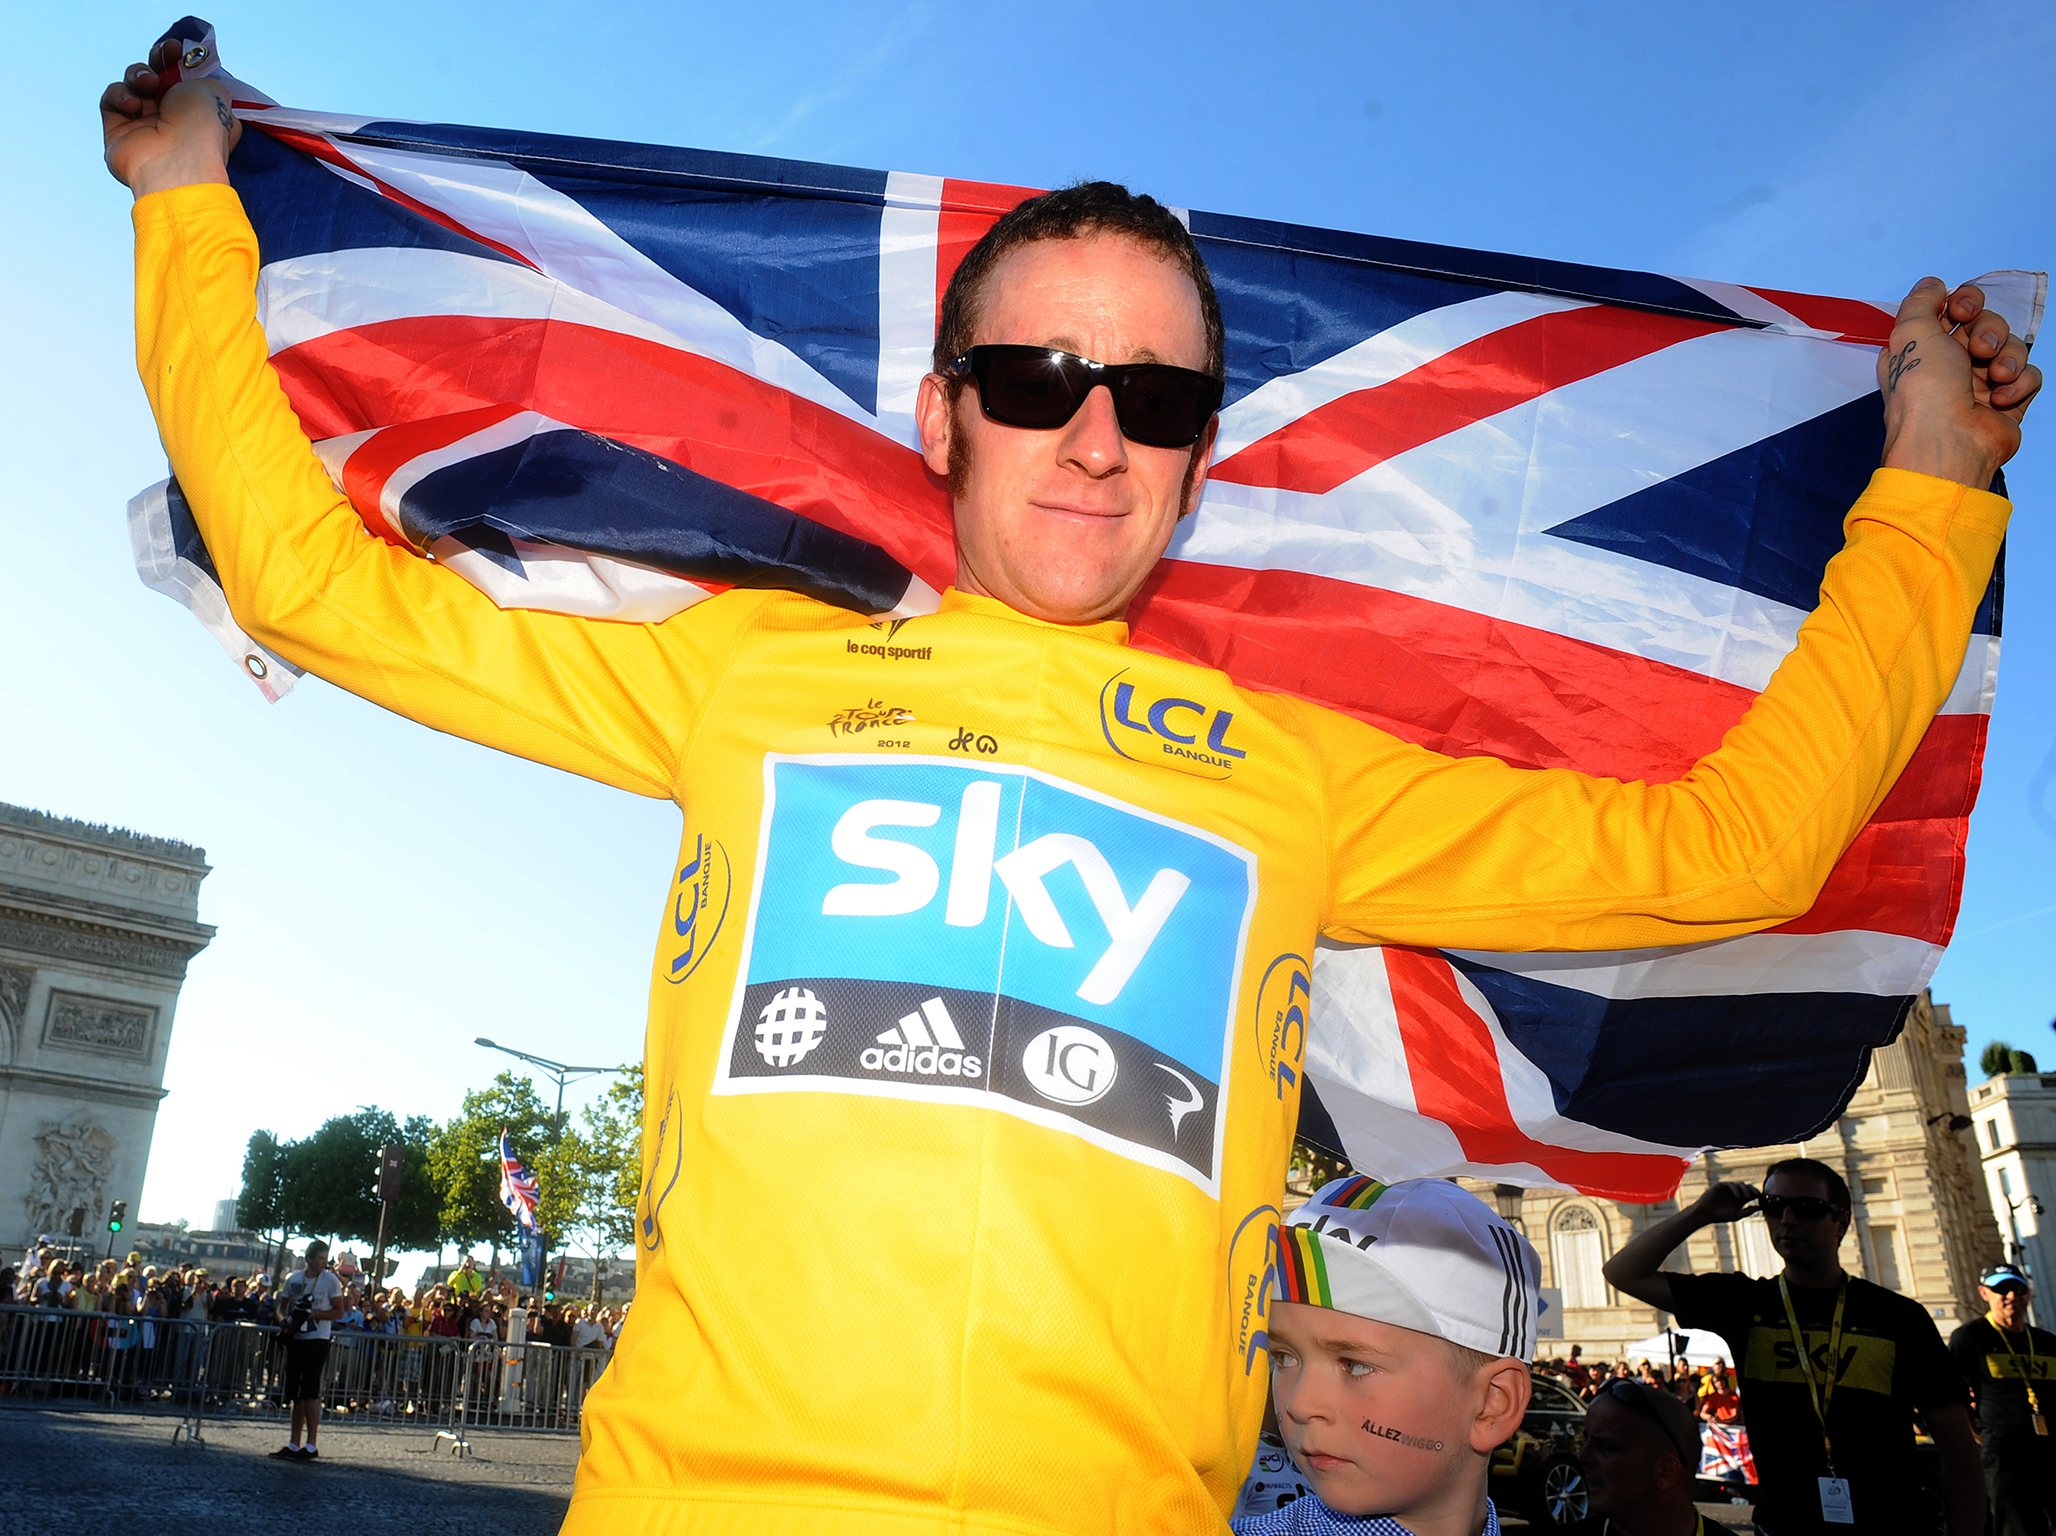 Team Sky's Bradley Wiggins won the 2012 Tour de France